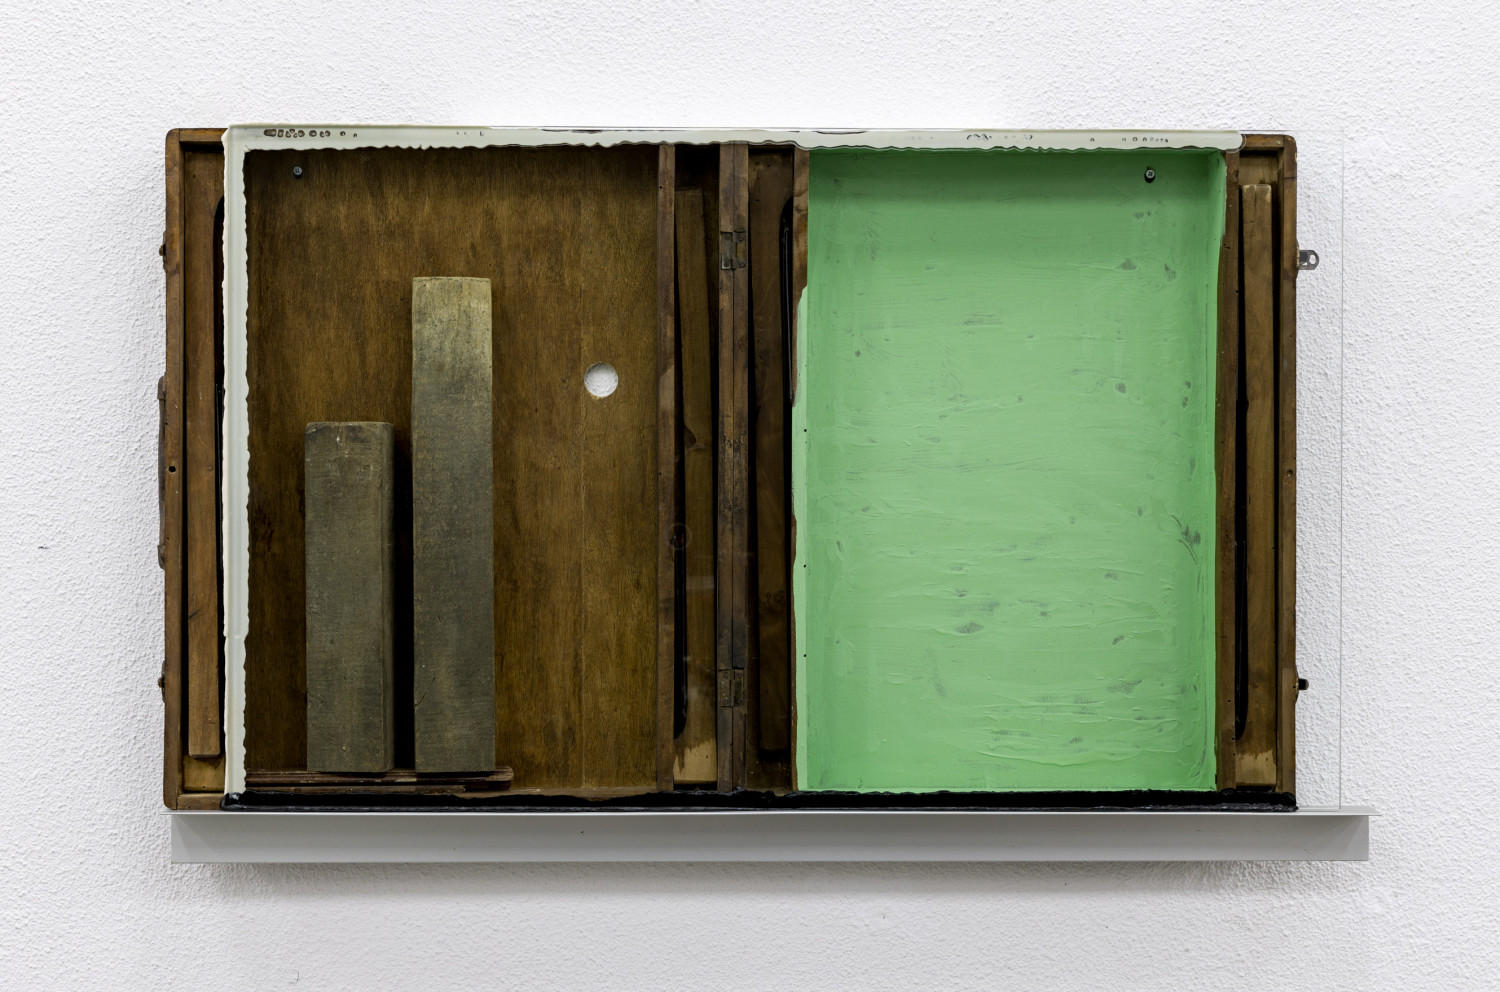 Pedro Cabrita Reis, ‘Natura morta II’, 2023, Glass, aluminium, found wood objects, acrylic on found wood object